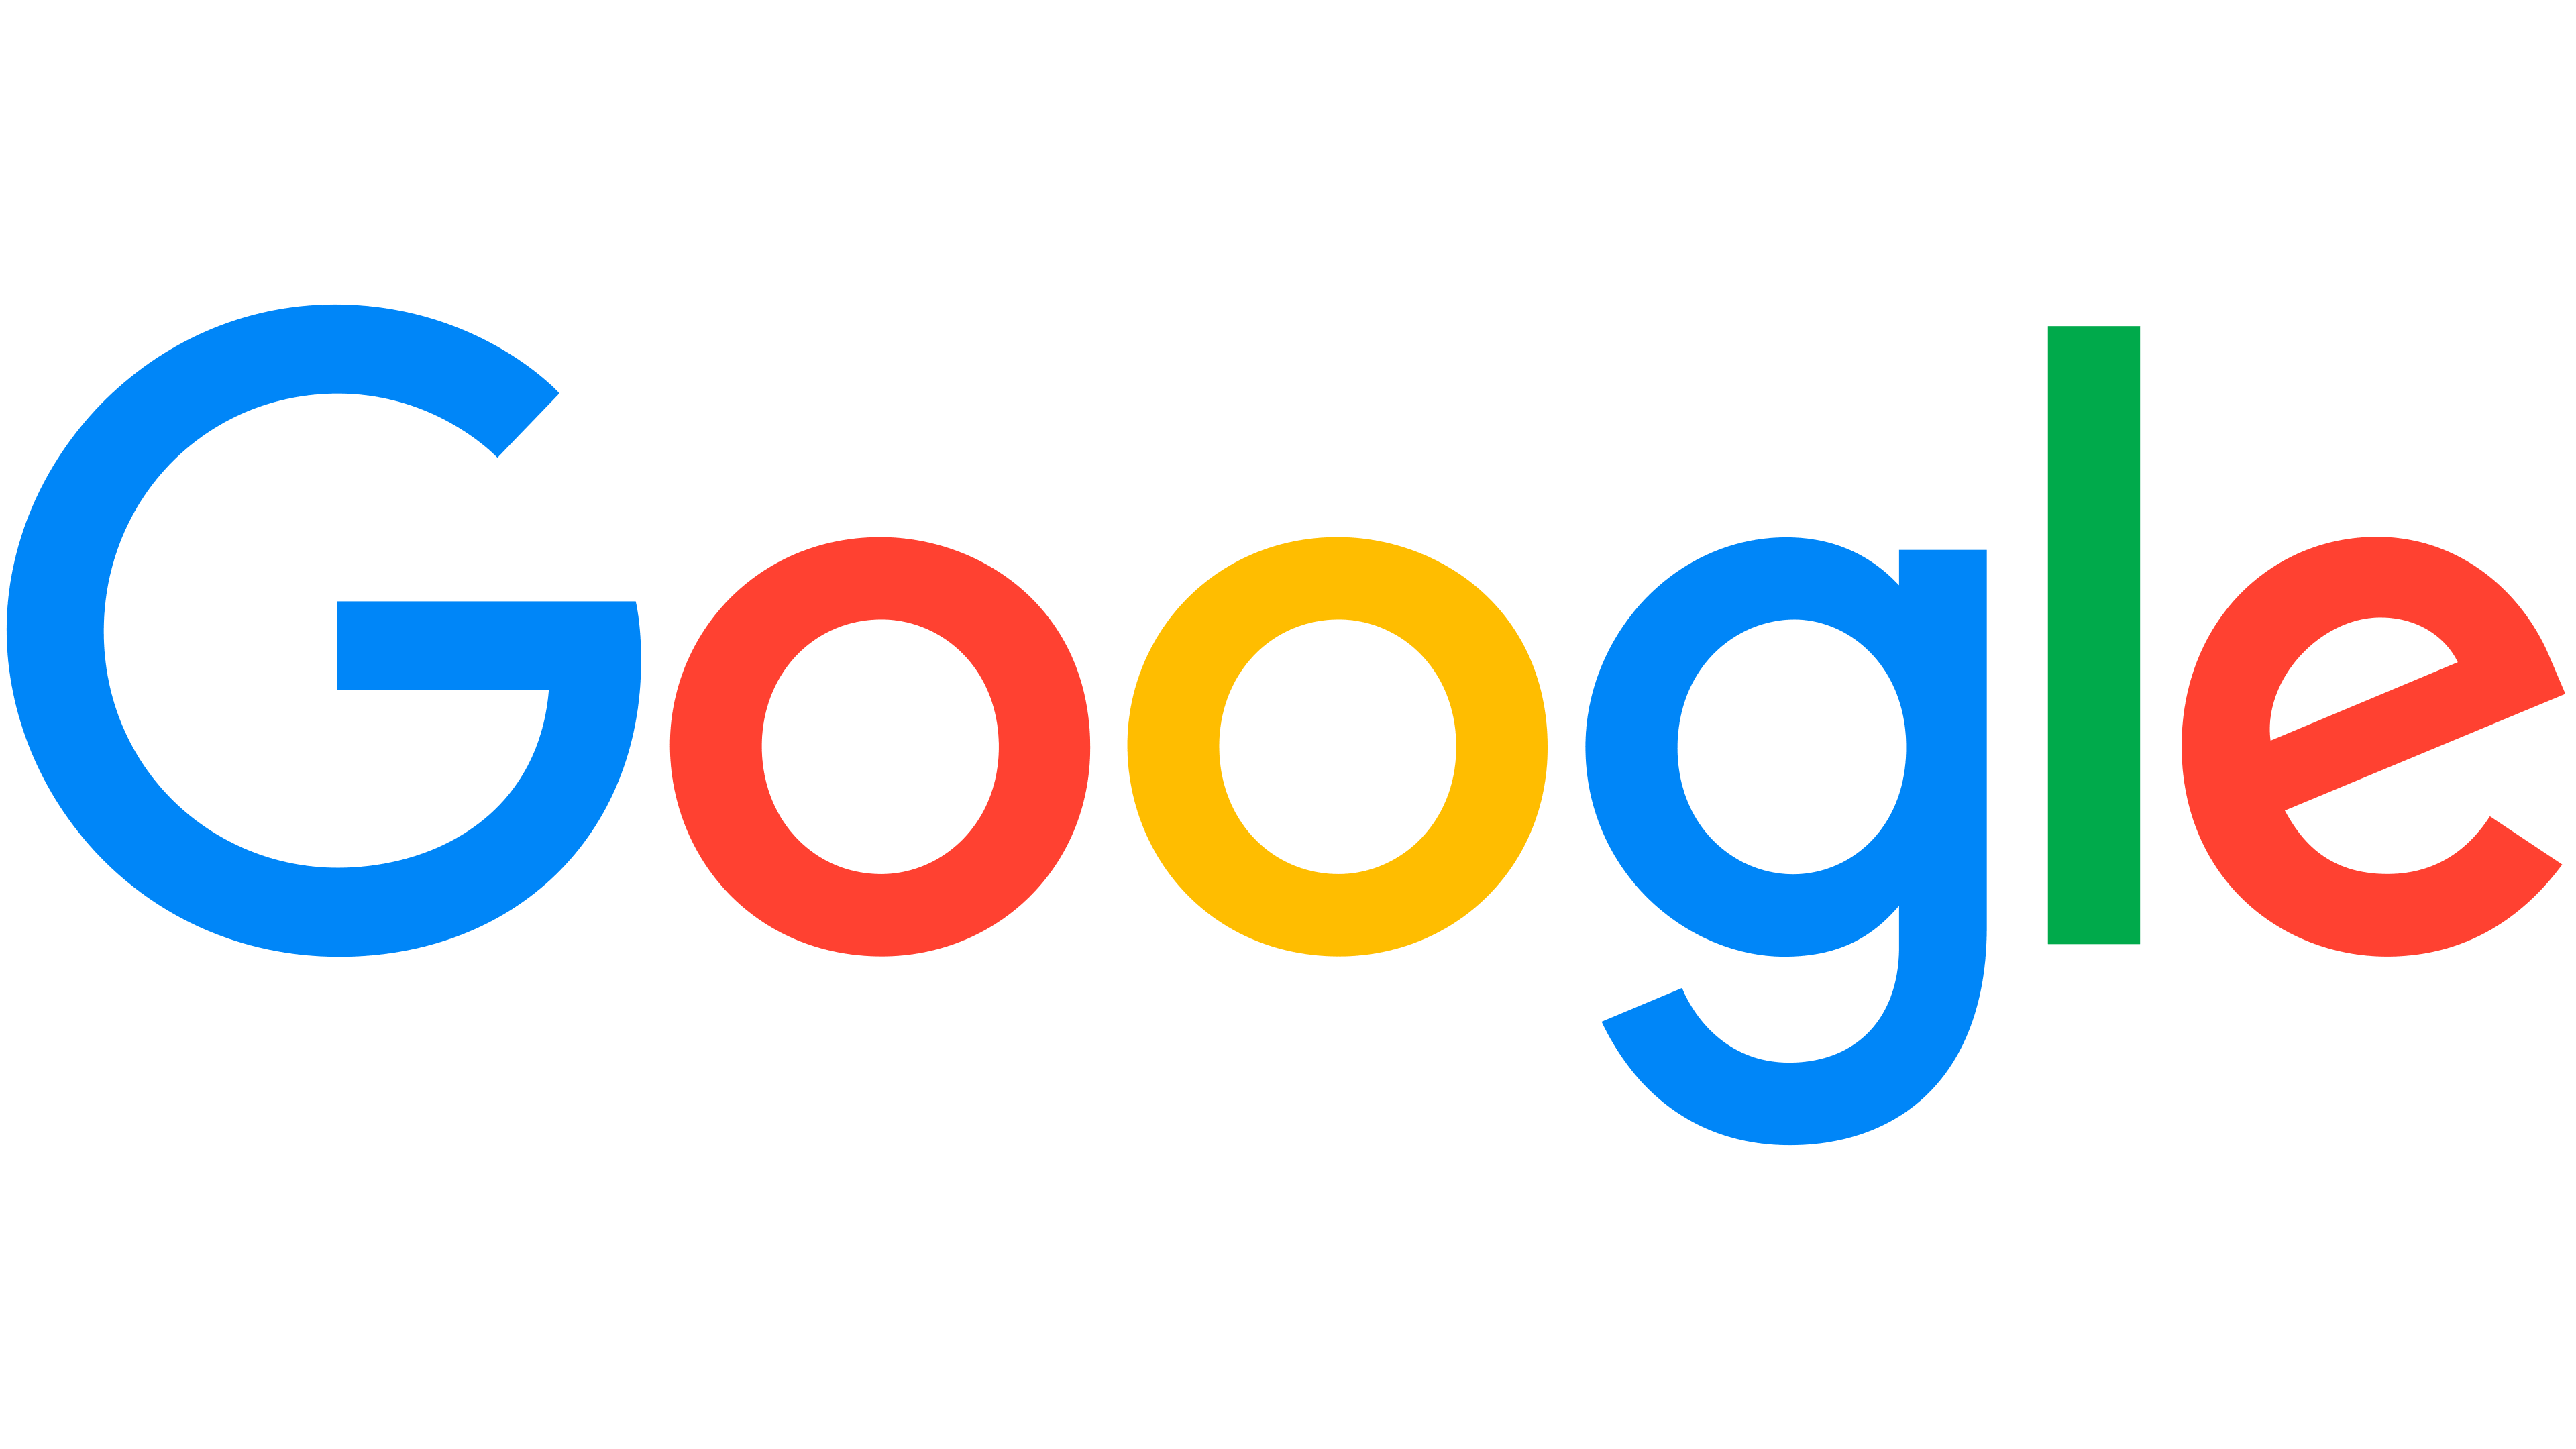 Google co